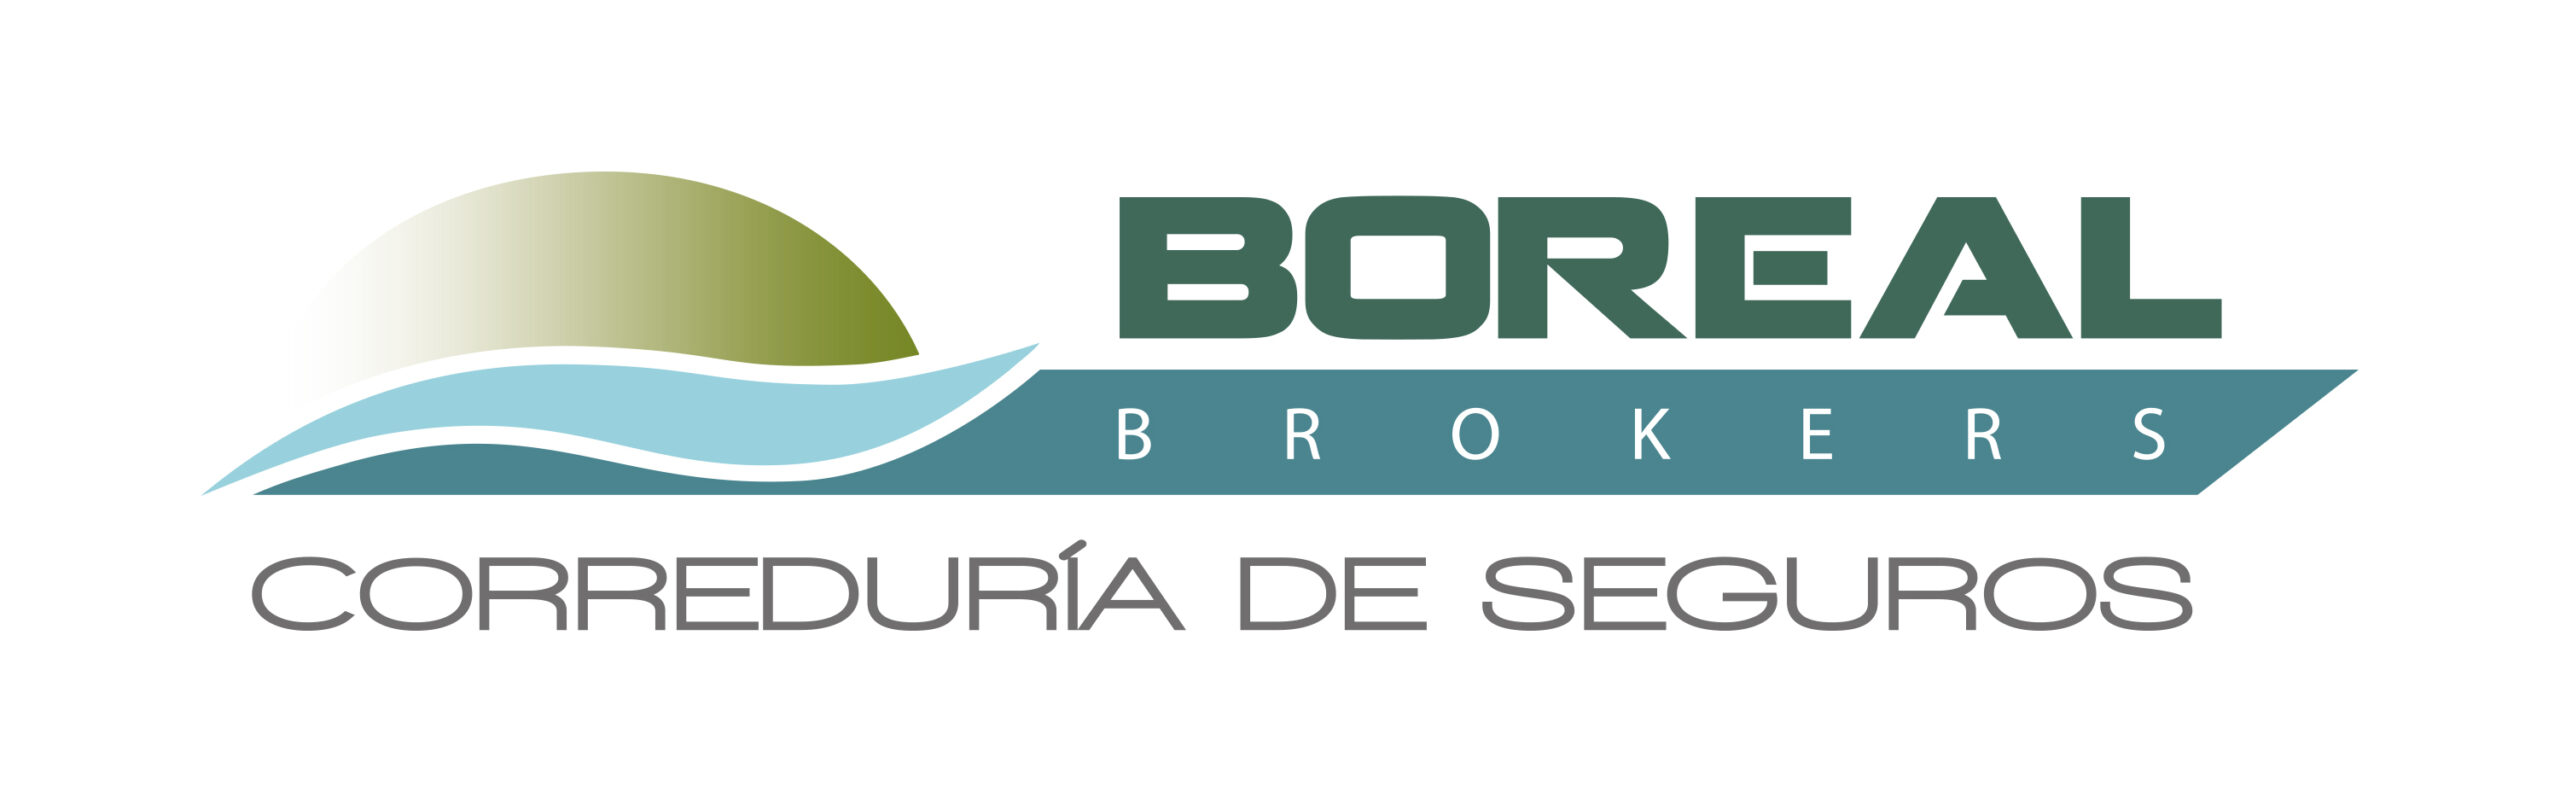 logo boreal brokers 2015_XL